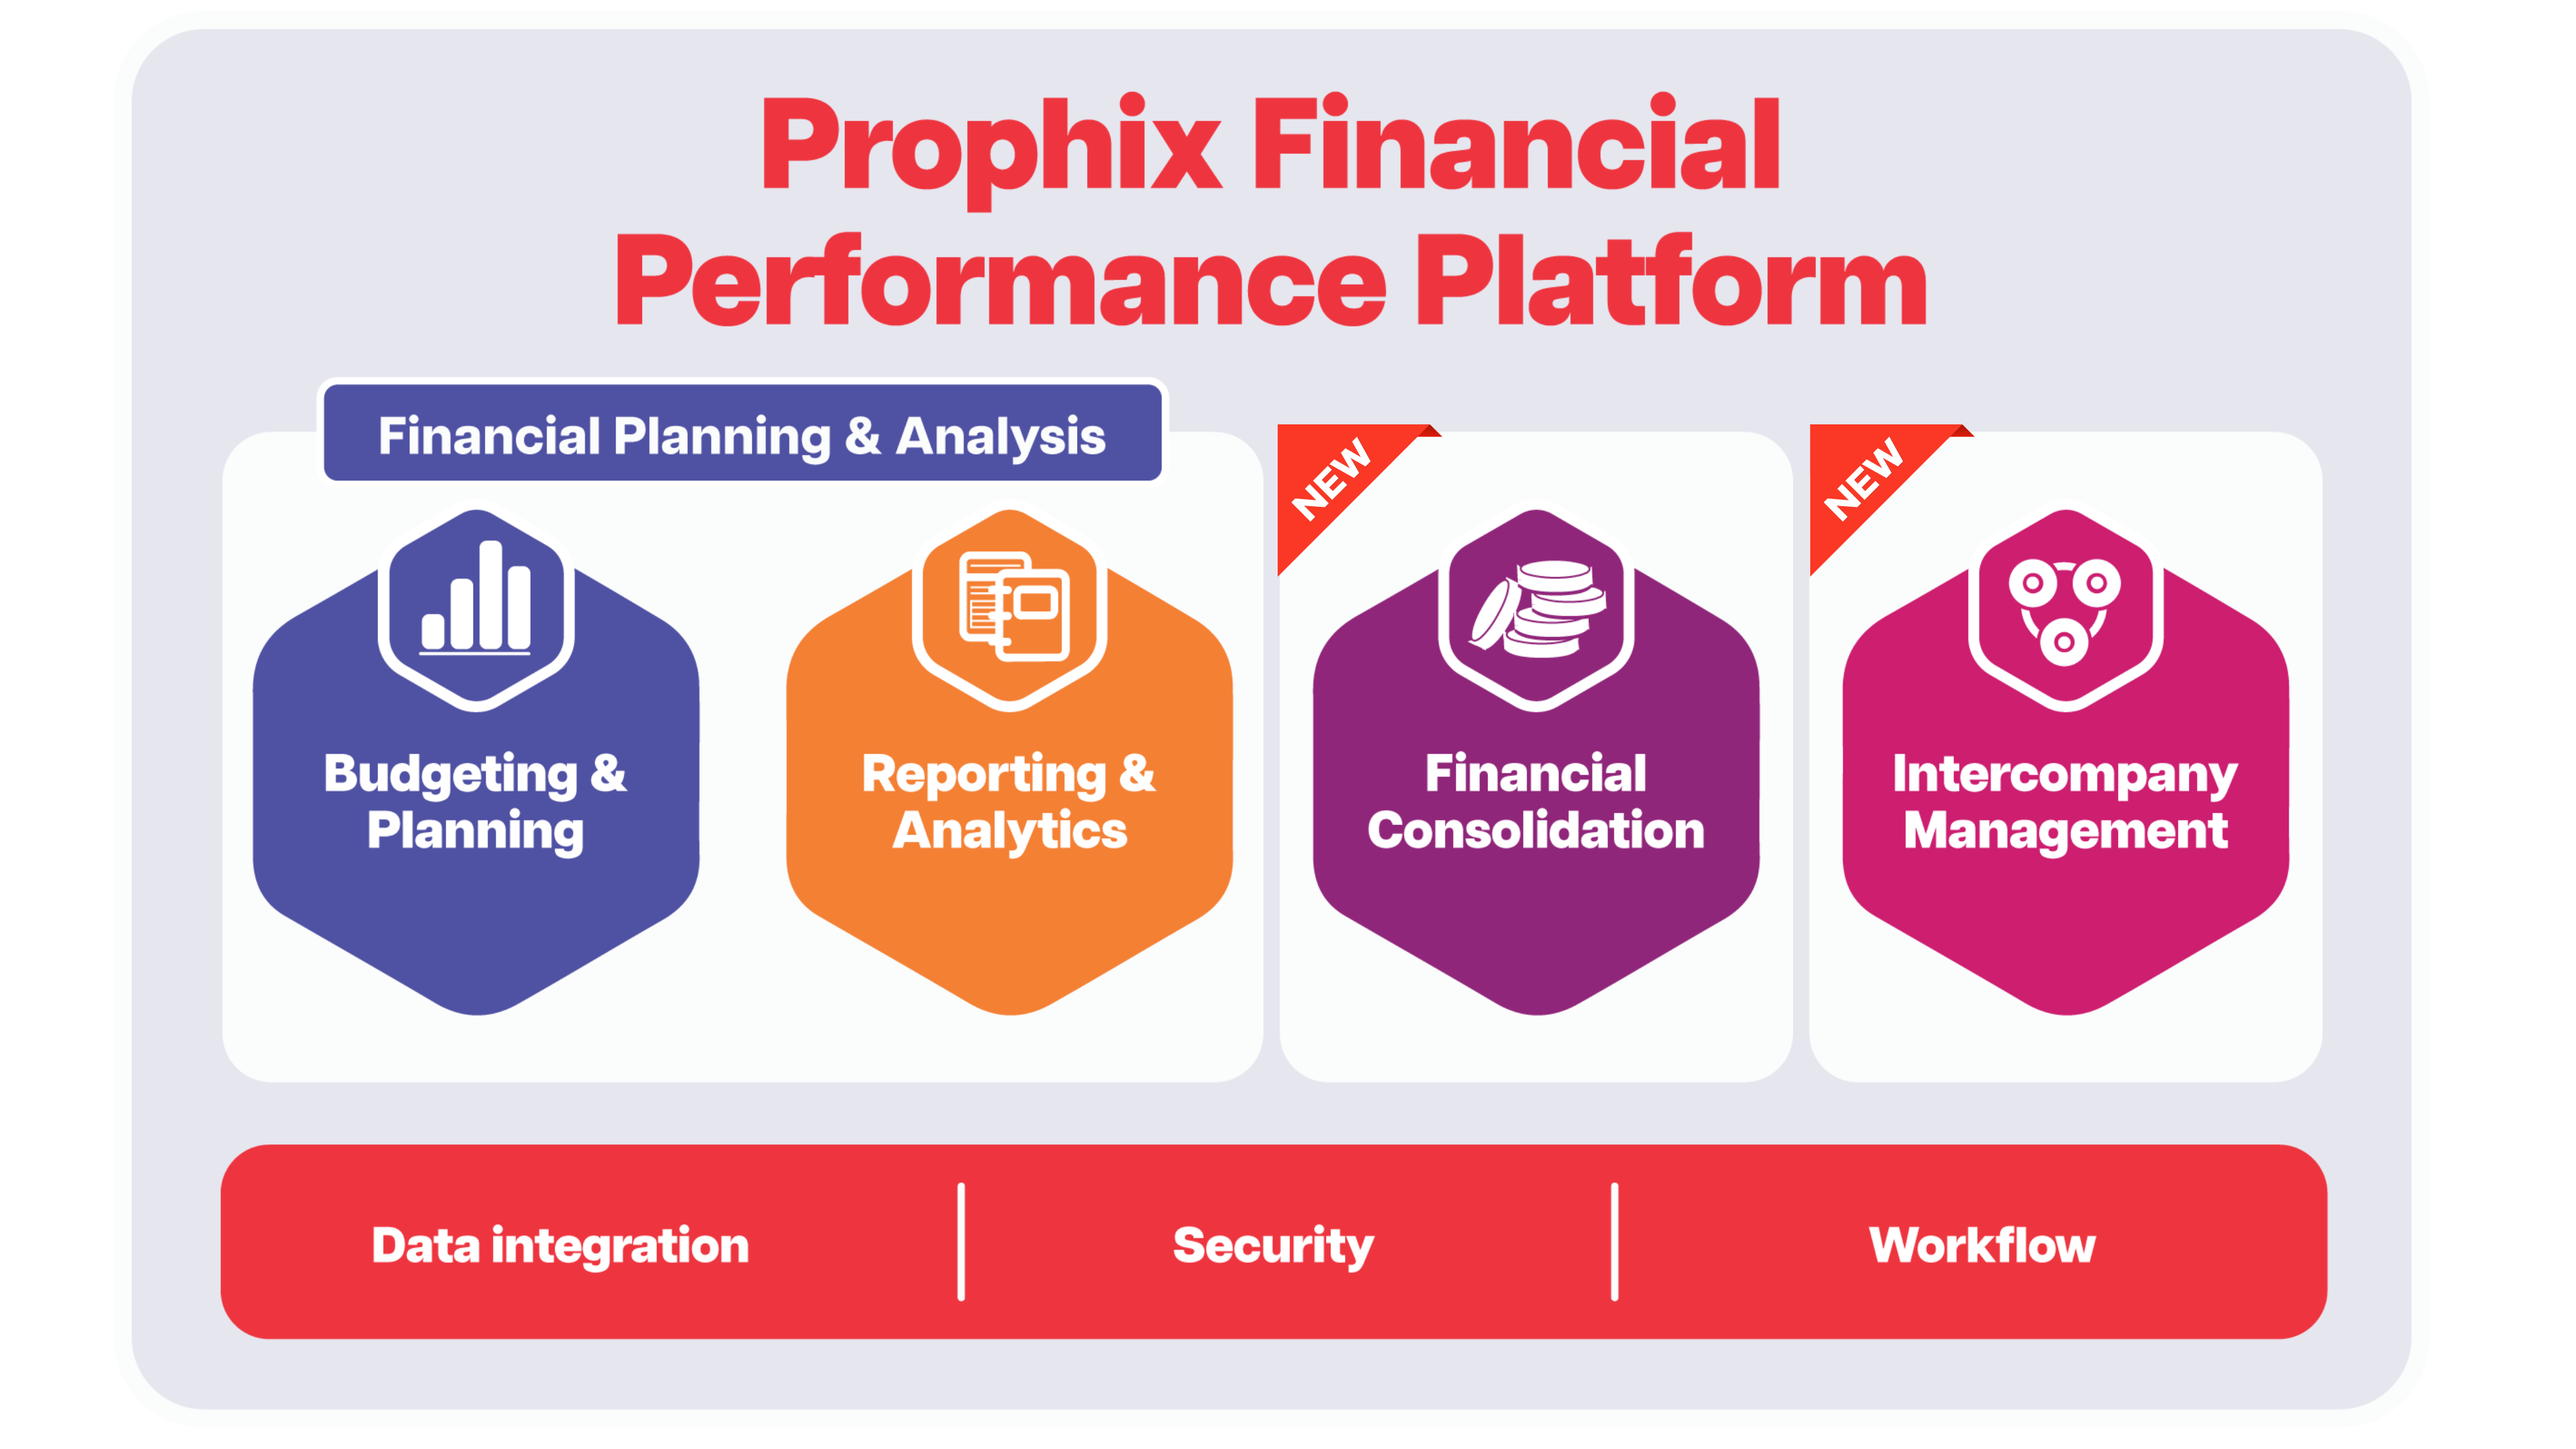 A Complete Financial Performance Platform